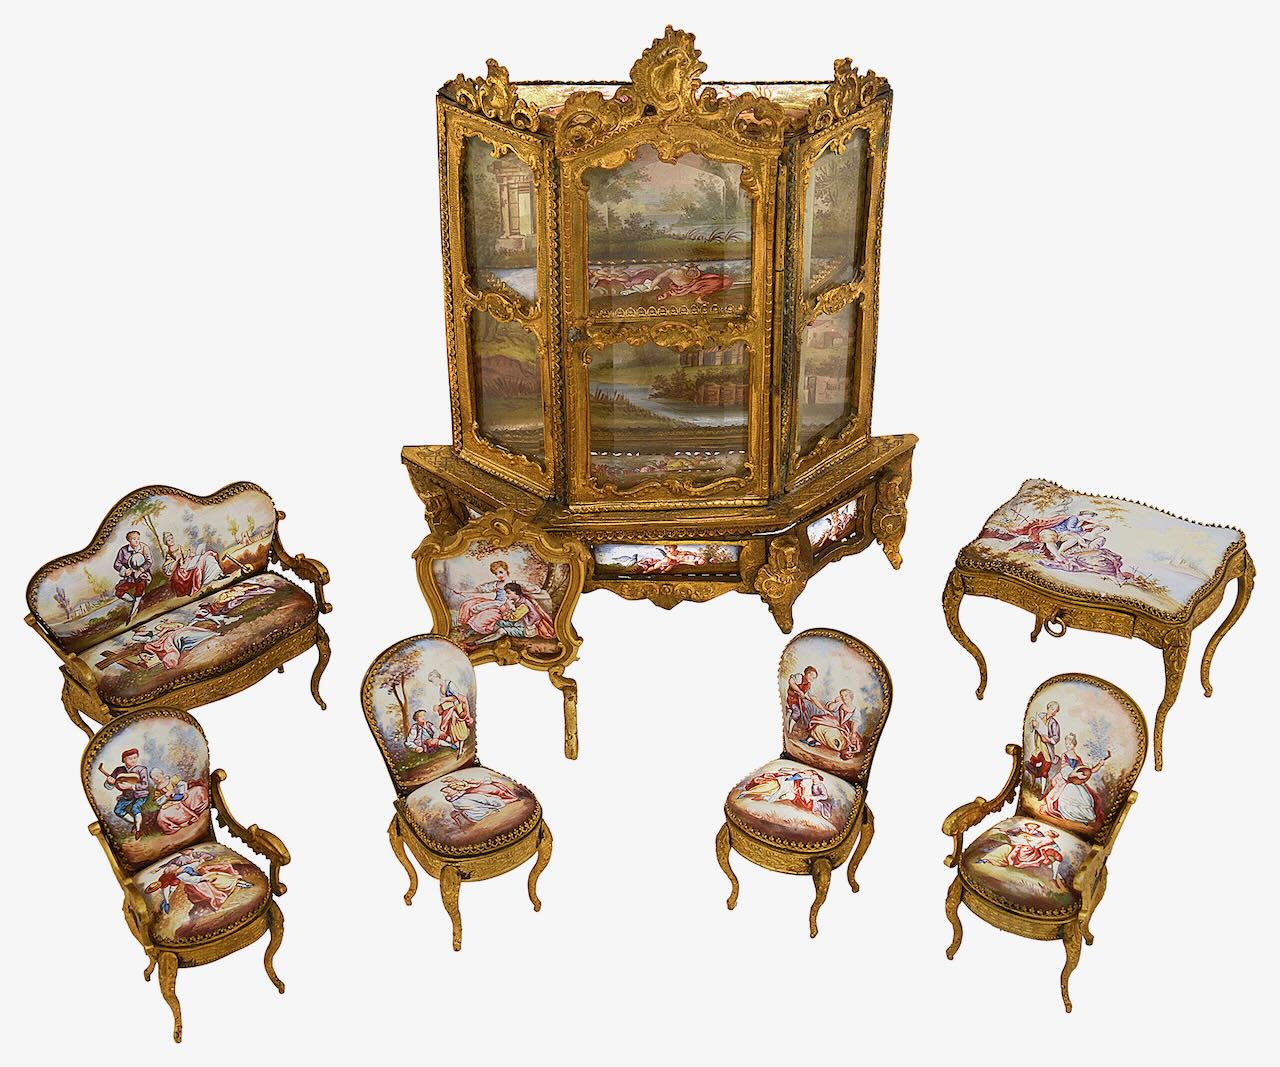 Austrian Viennese gilt metal and enamel miniature salon furniture